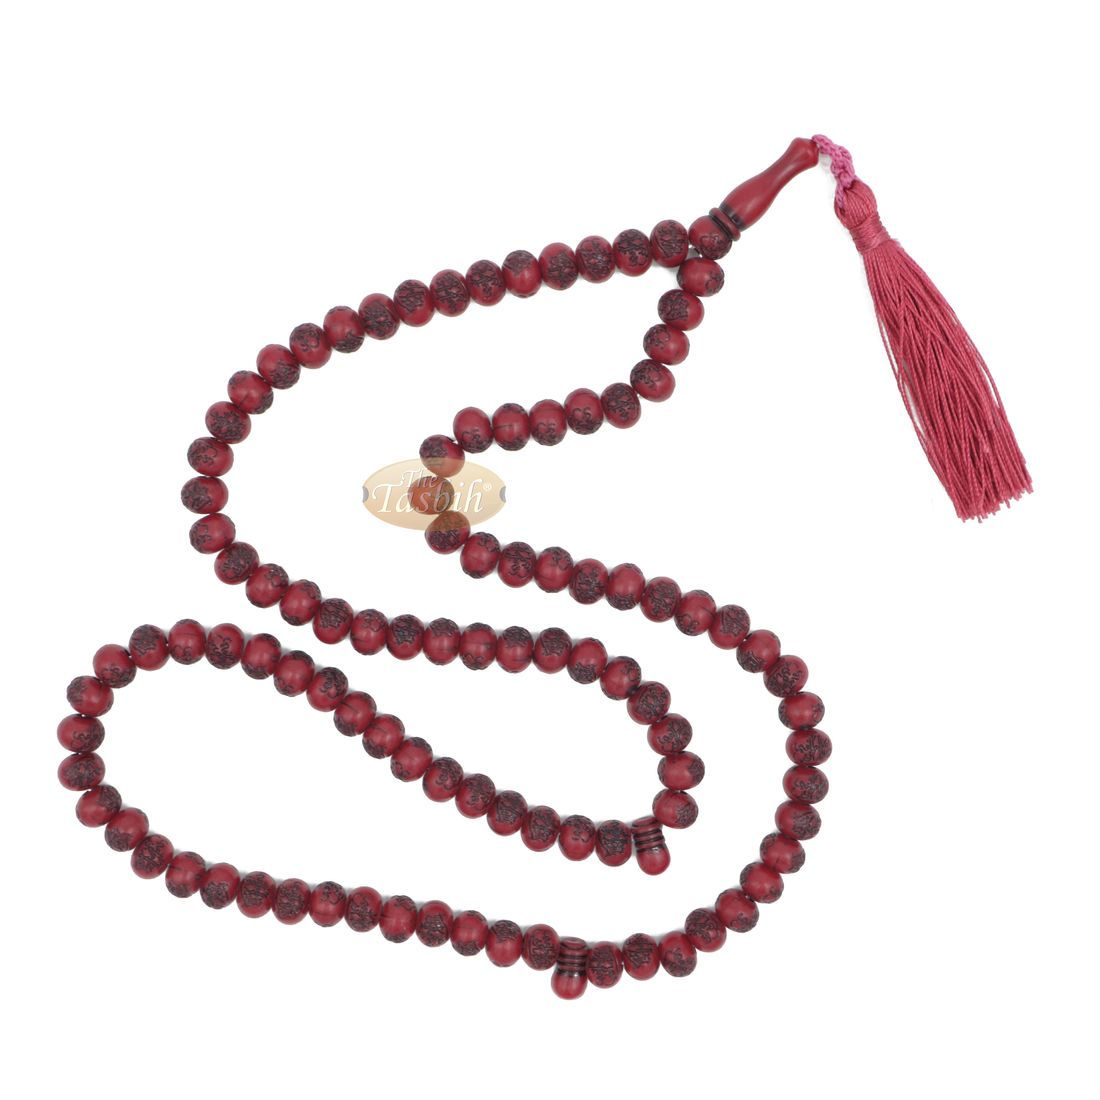 Basmallah Dark Red Plastic Tasbih 8mm Prayer Beads Bismillahirrahmanirrahim on Each Bead